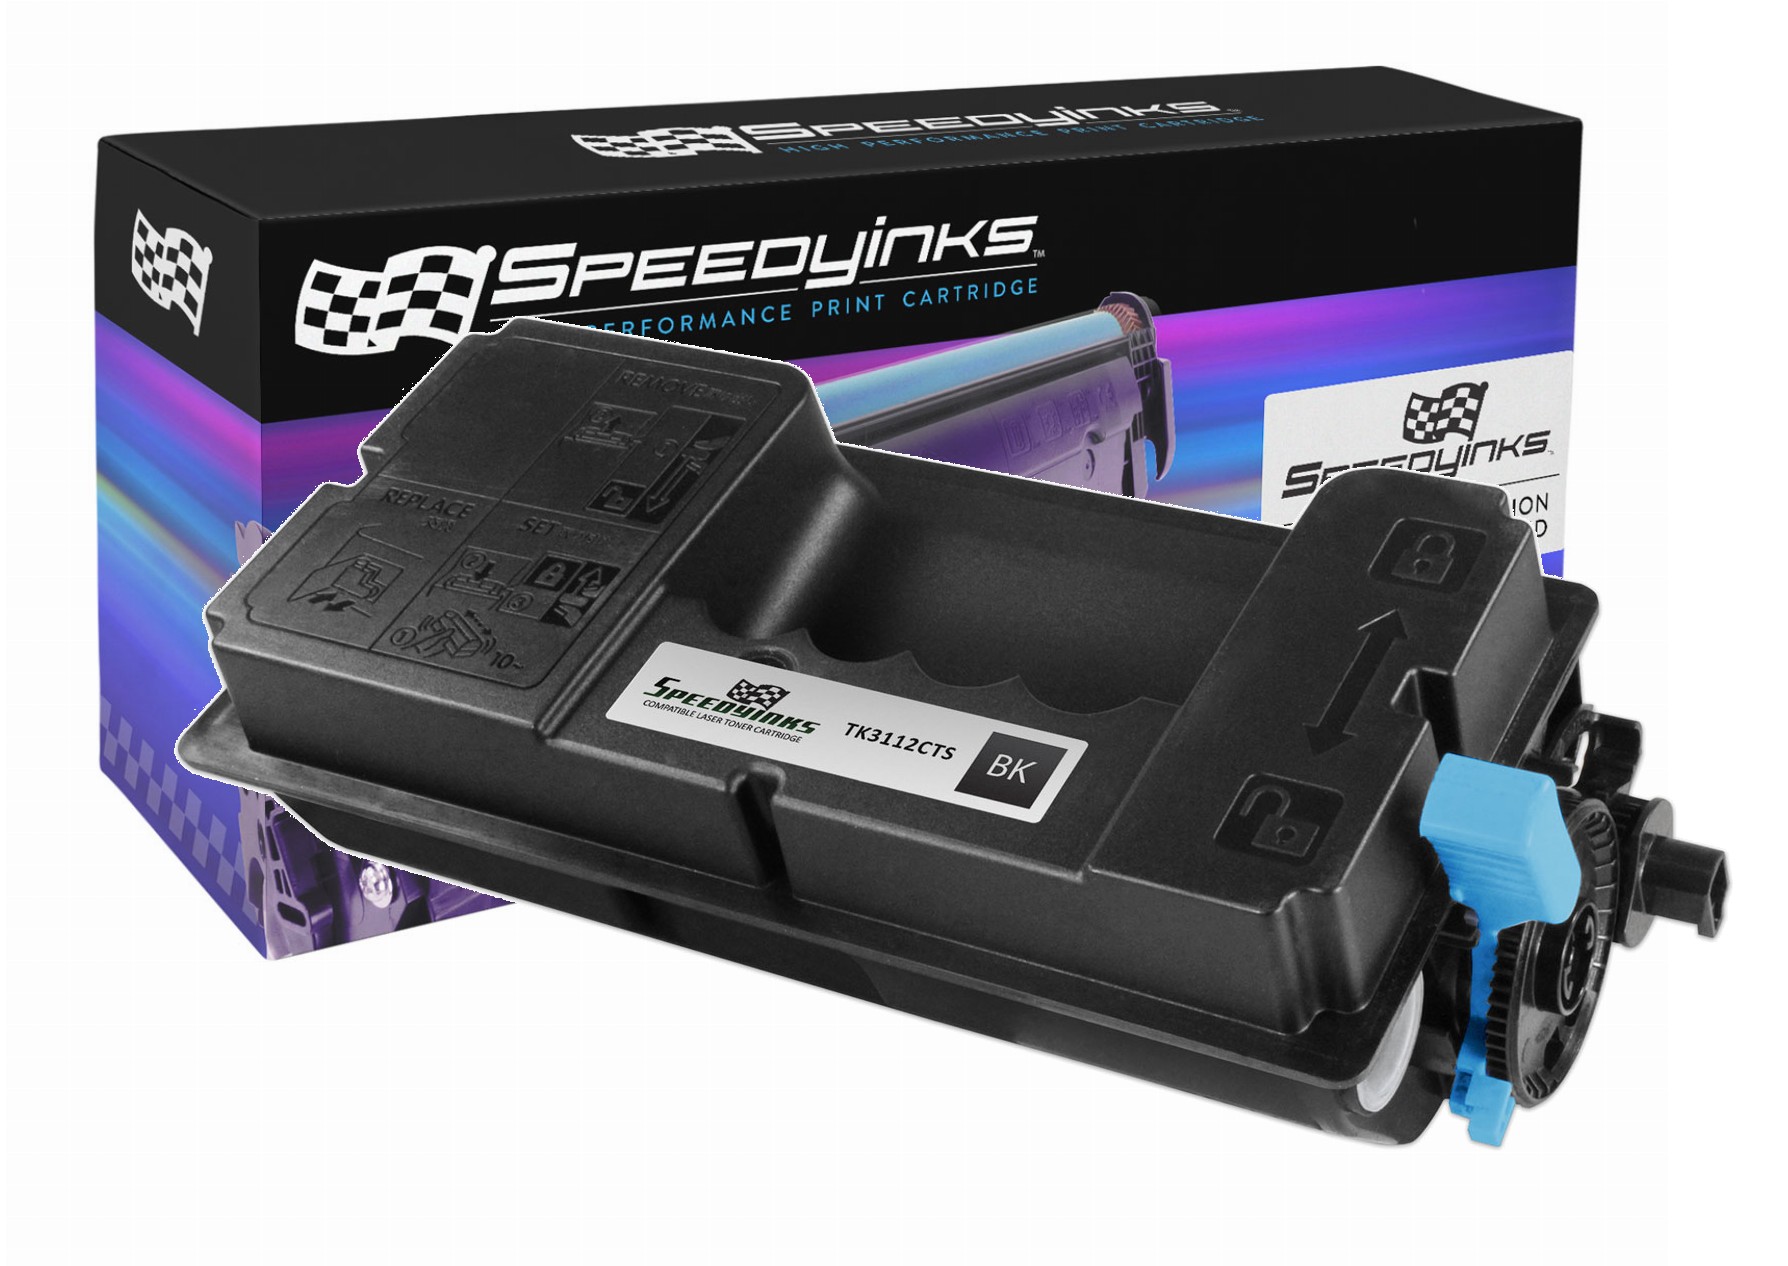 SpeedyInks - Compatible Kyocera-Mita Black TK-3112 Laser Toner Cartridge For use in FS-4100dn - image 1 of 3